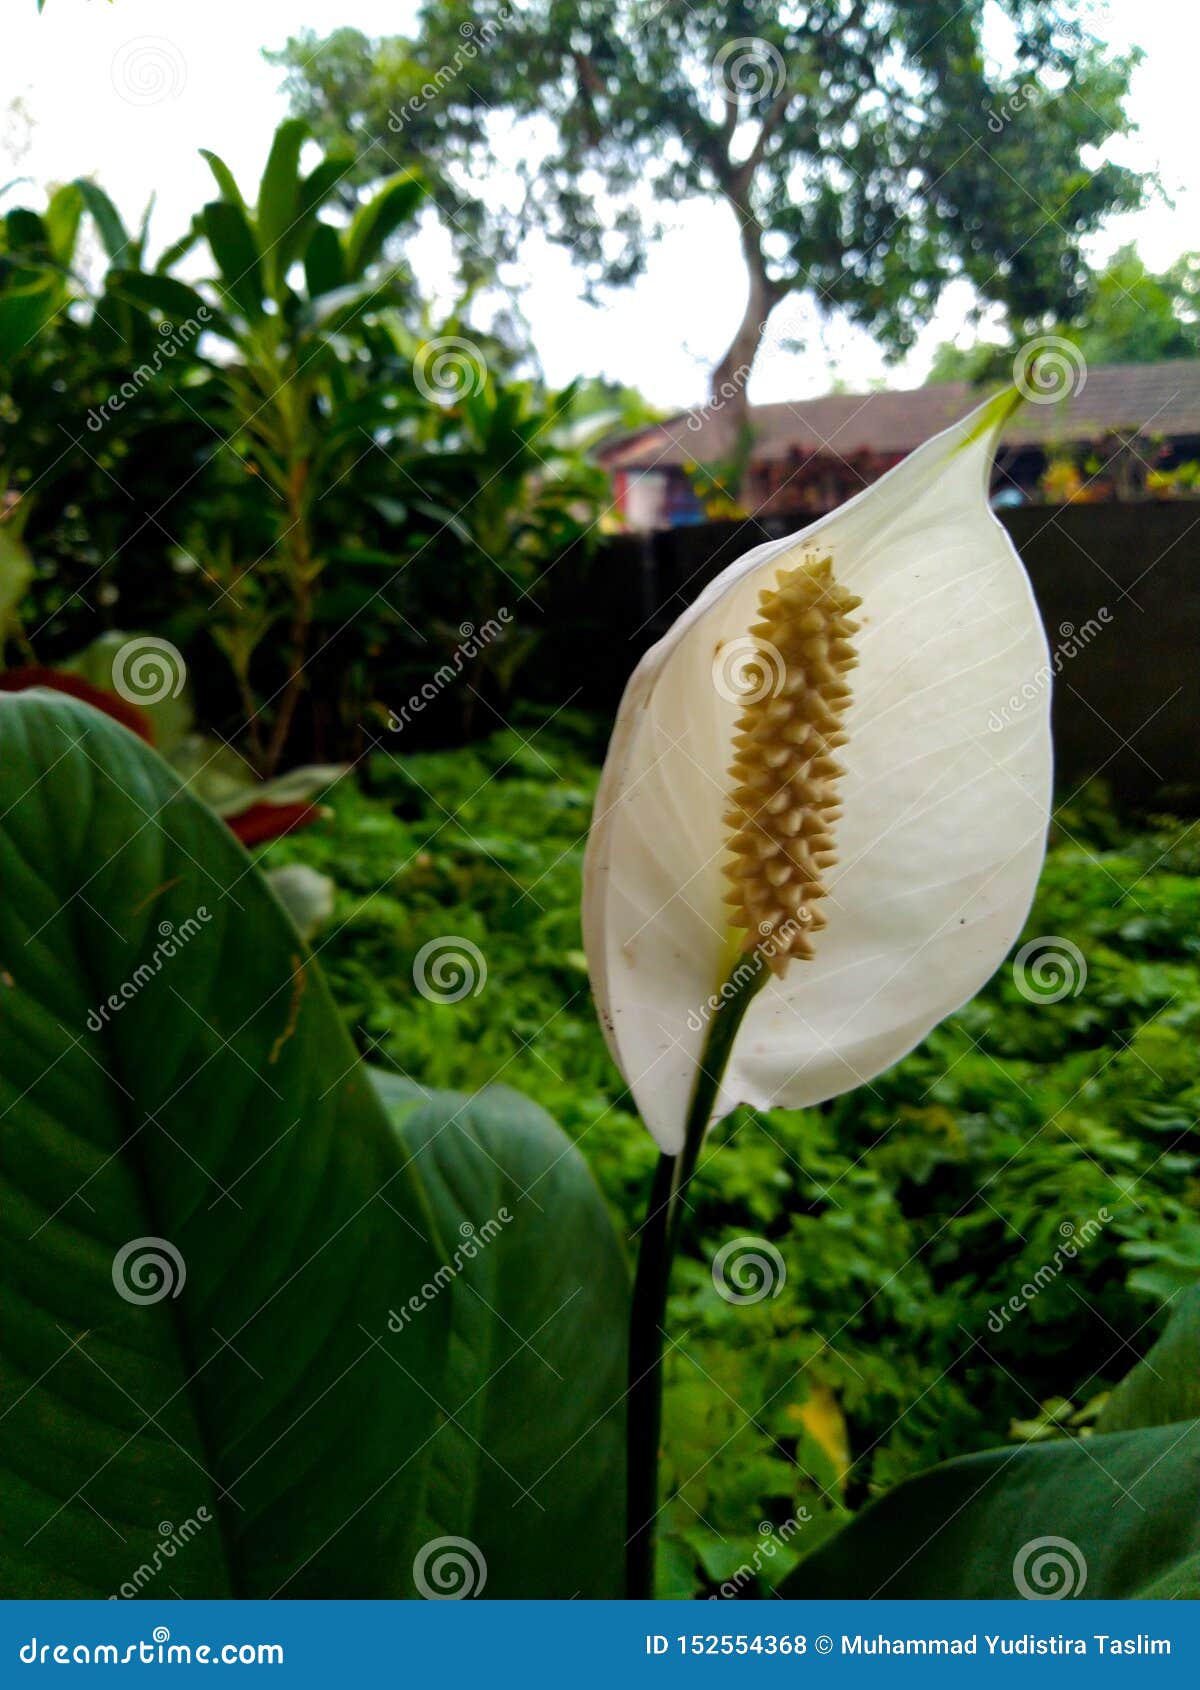 Bunga Sepatu Filum Or Peace Lily Plant, With White Petal ...